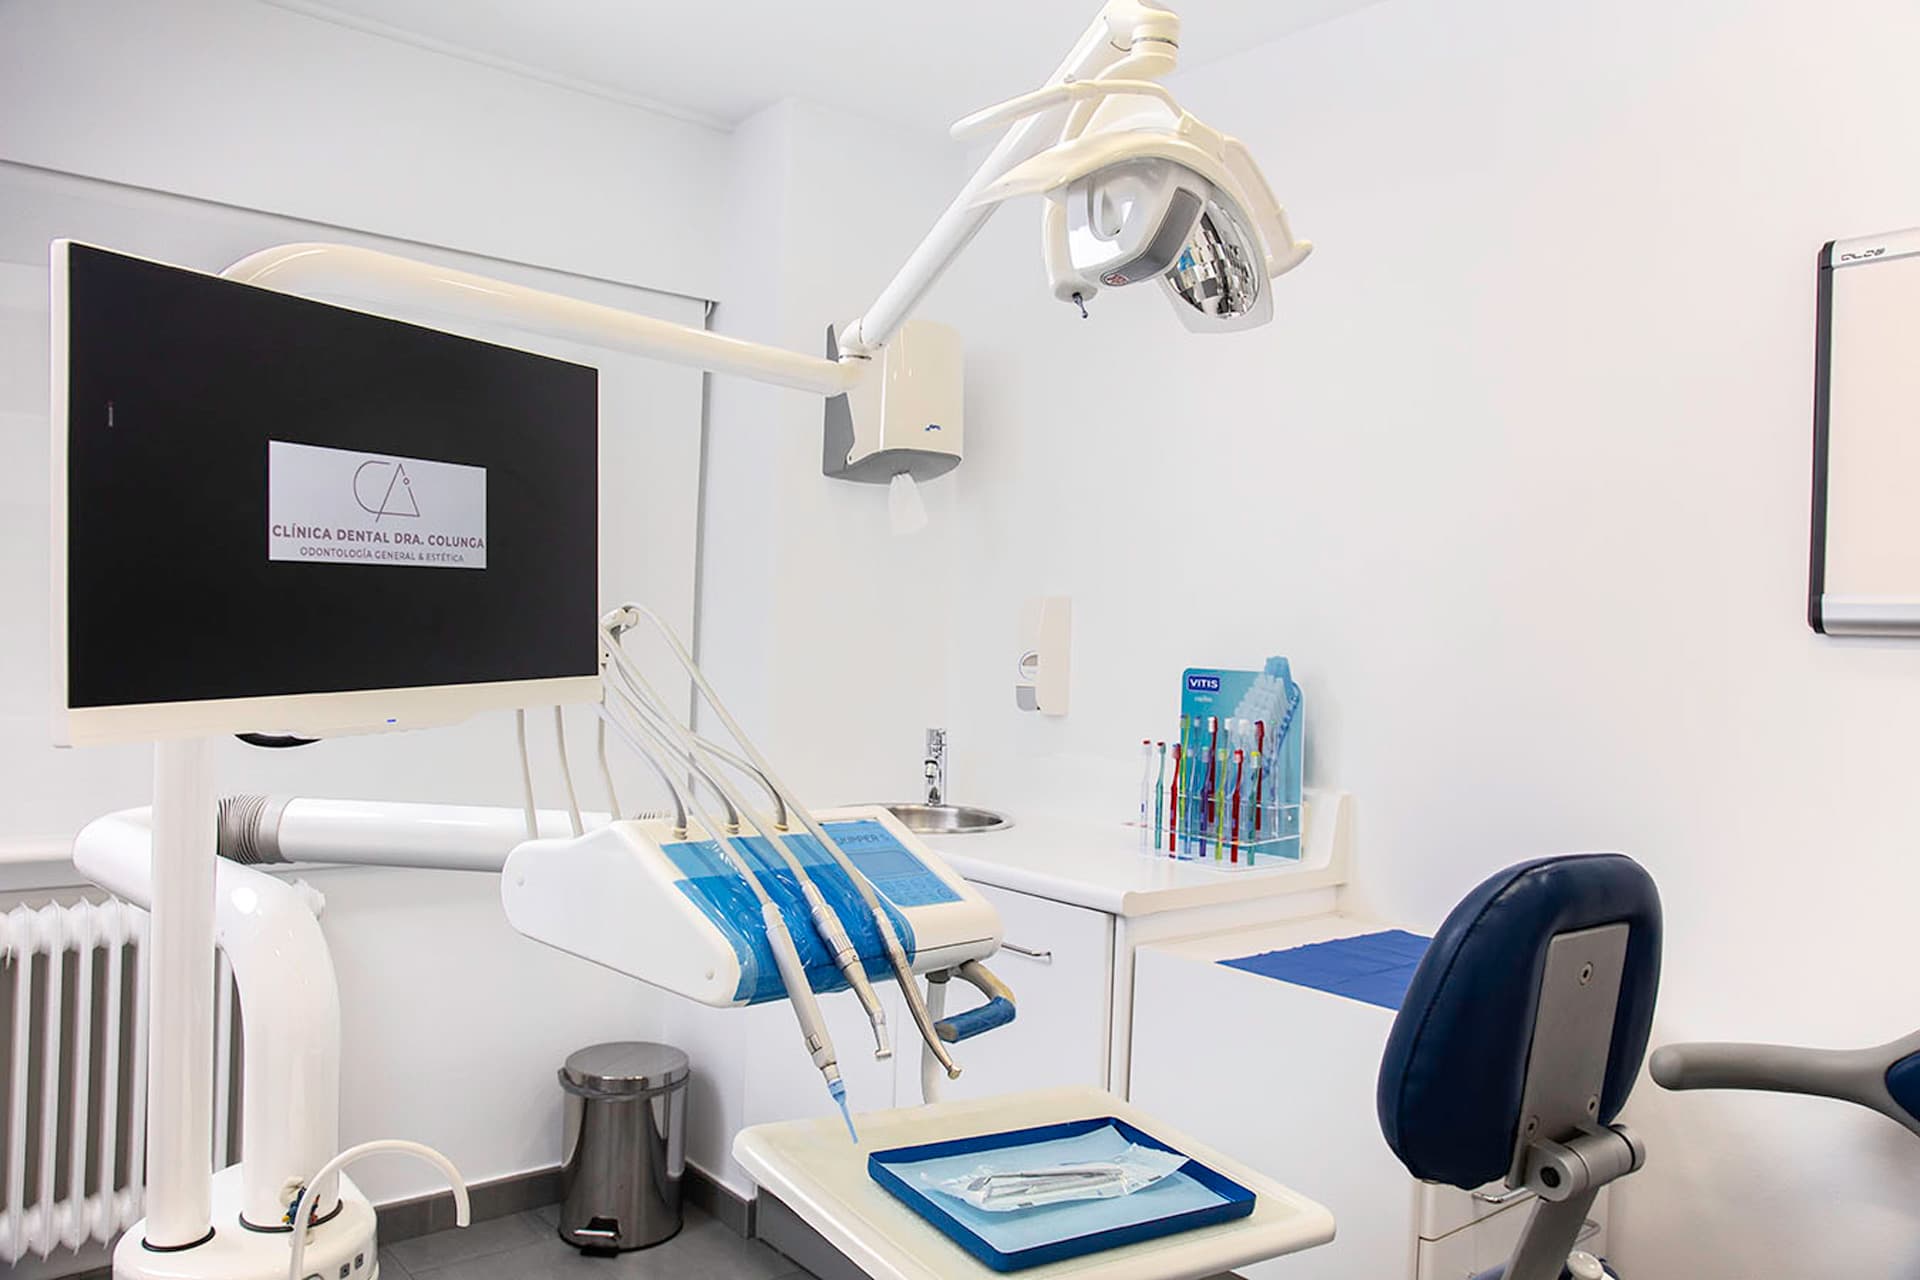 Tratamientos dentales en Vigo - Clínica Paloma Colunga